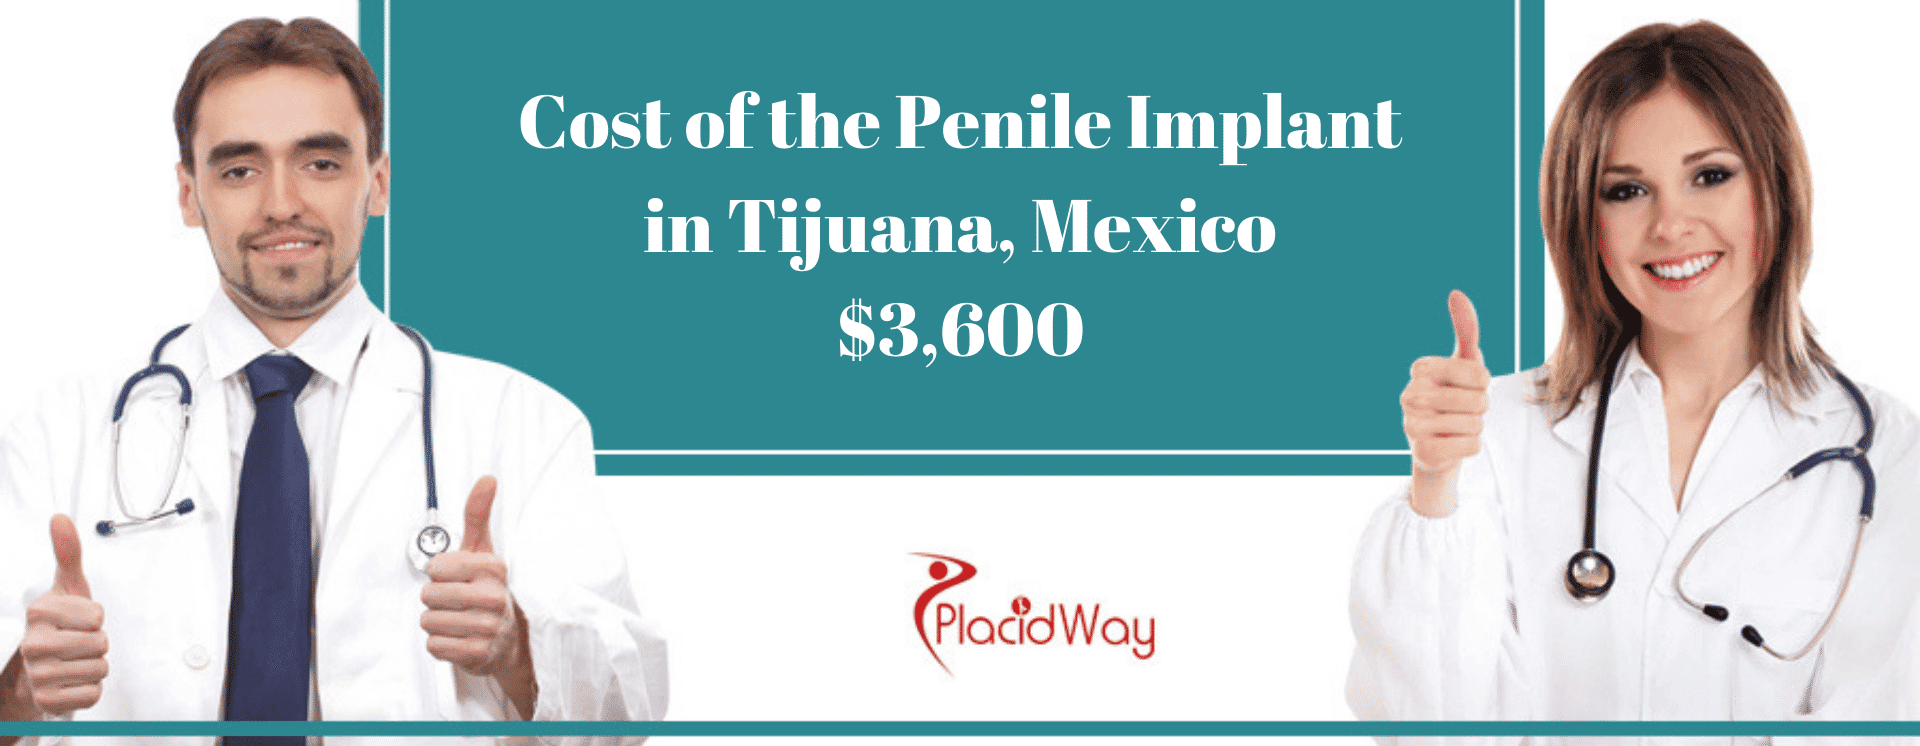 Cost of Penile Implant in Tijuana, Mexico